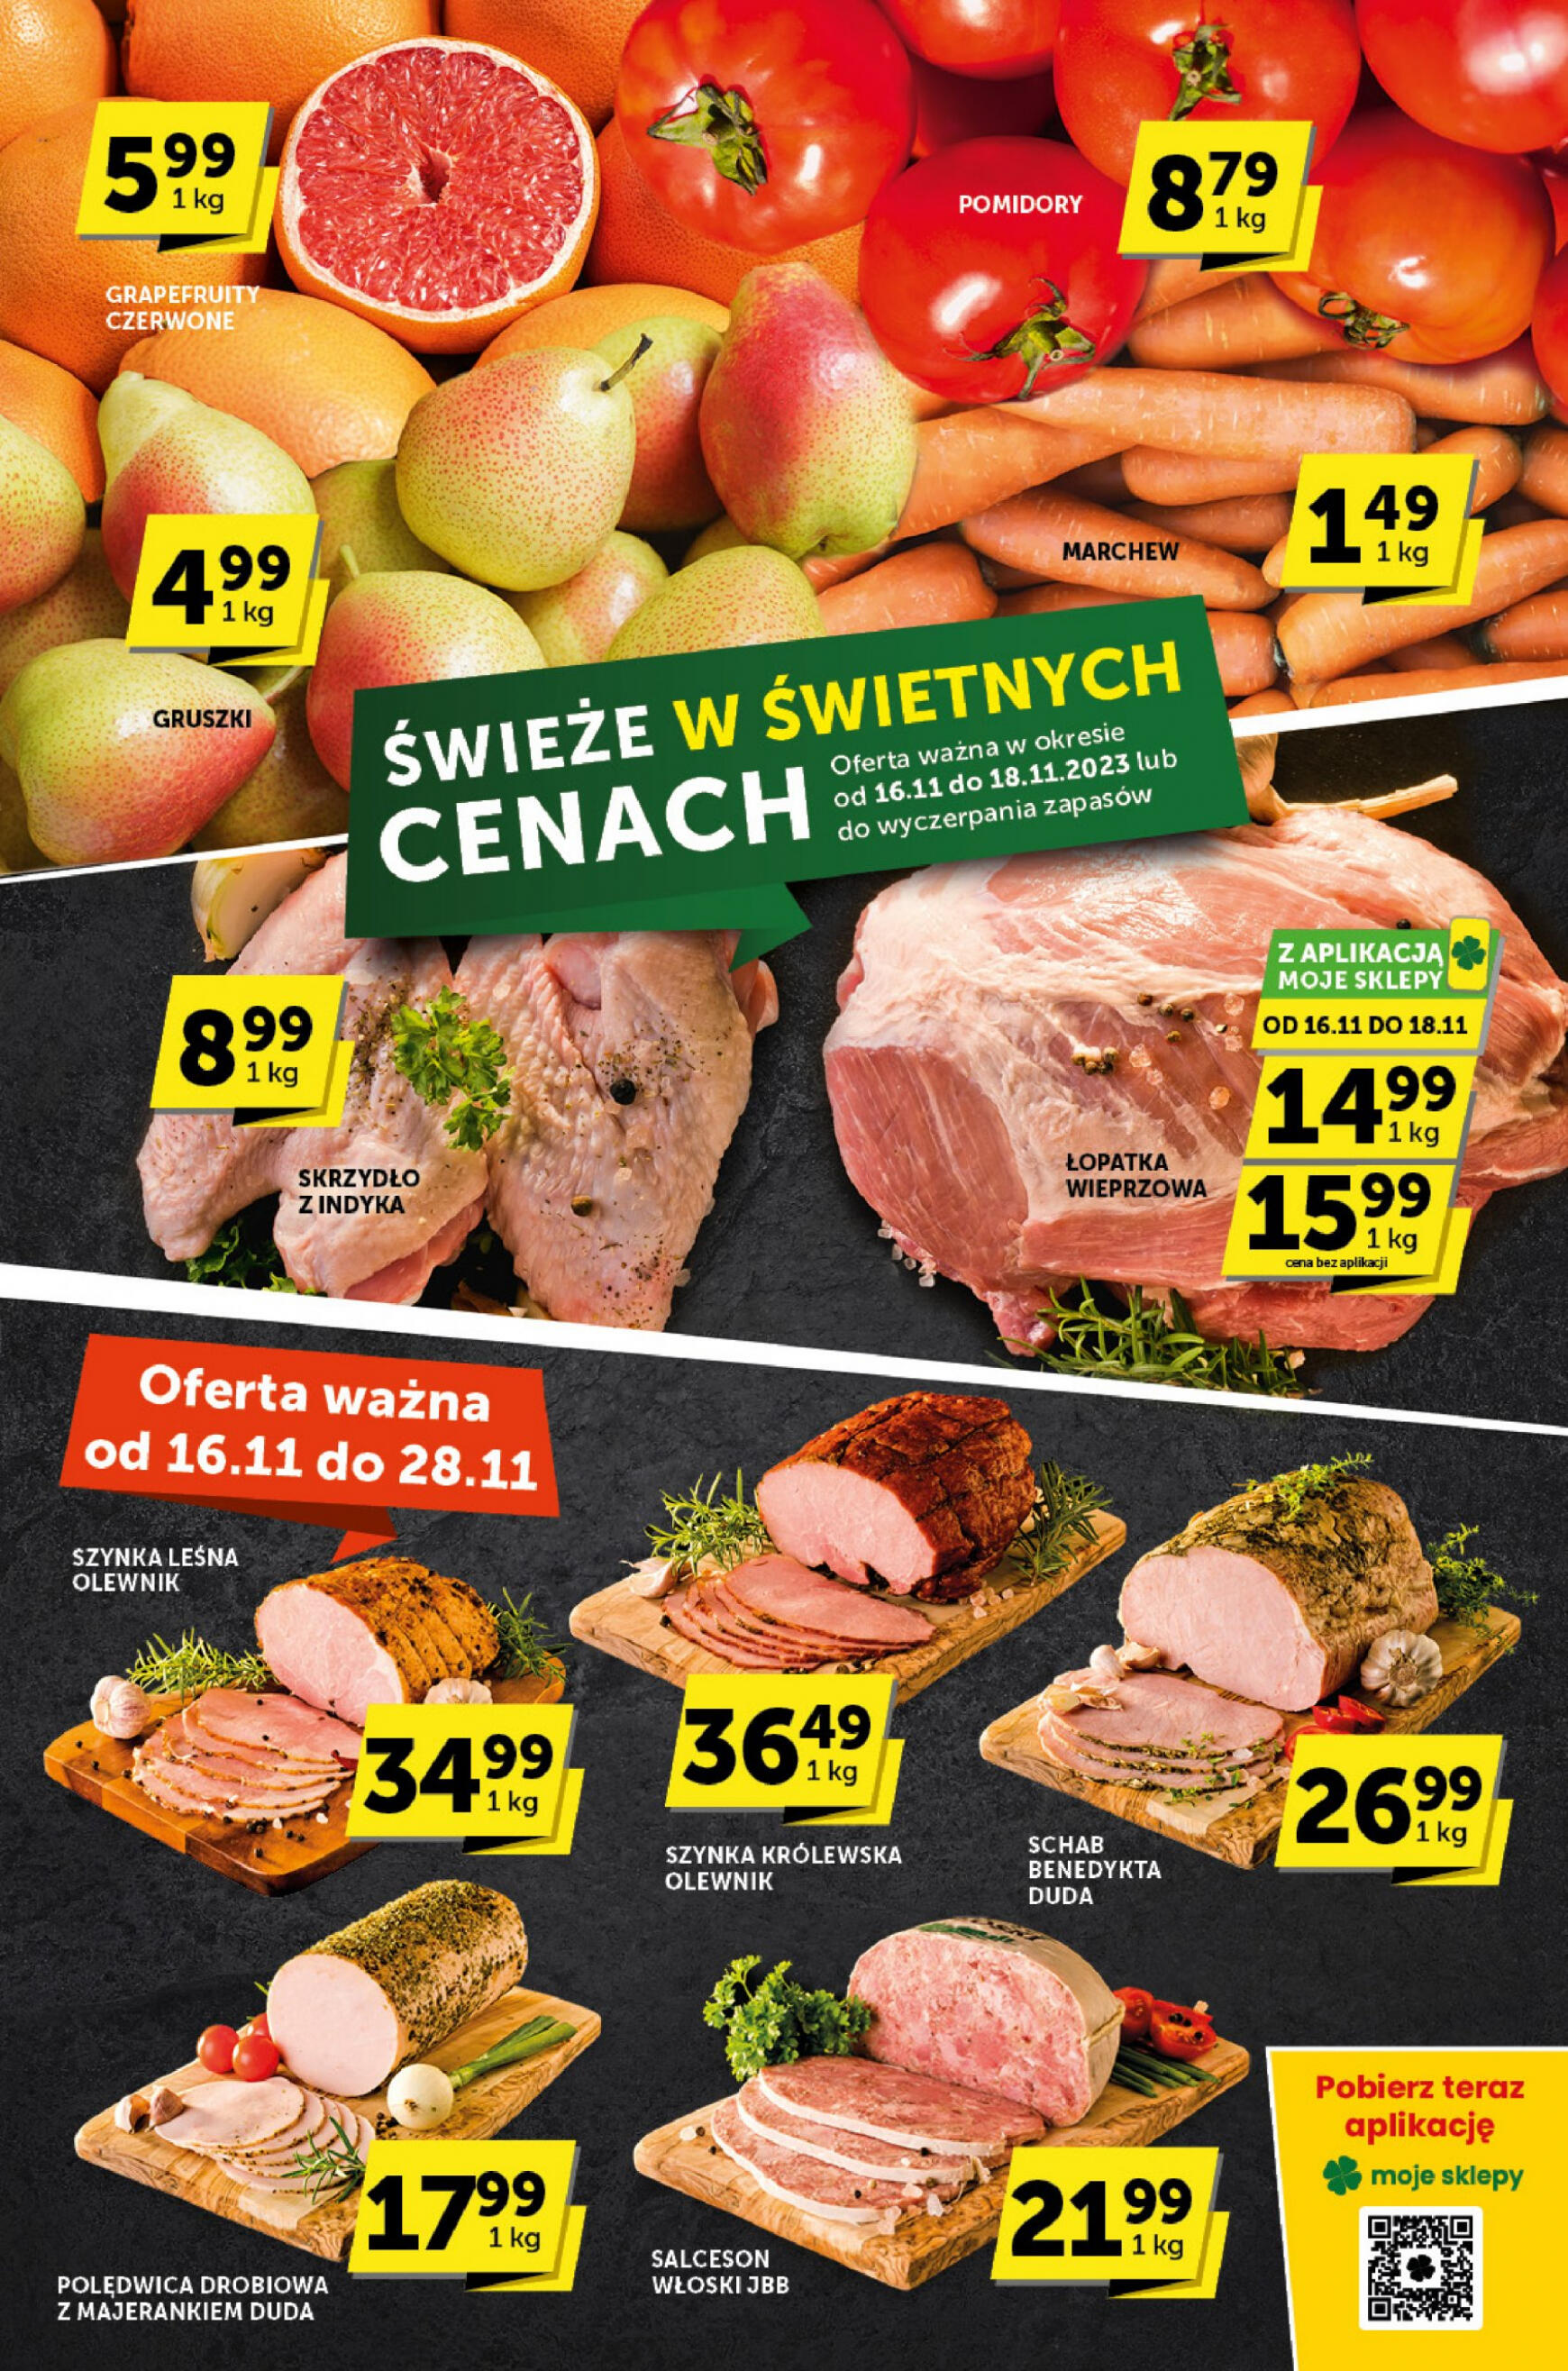 groszek - Groszek Supermarket - page: 3